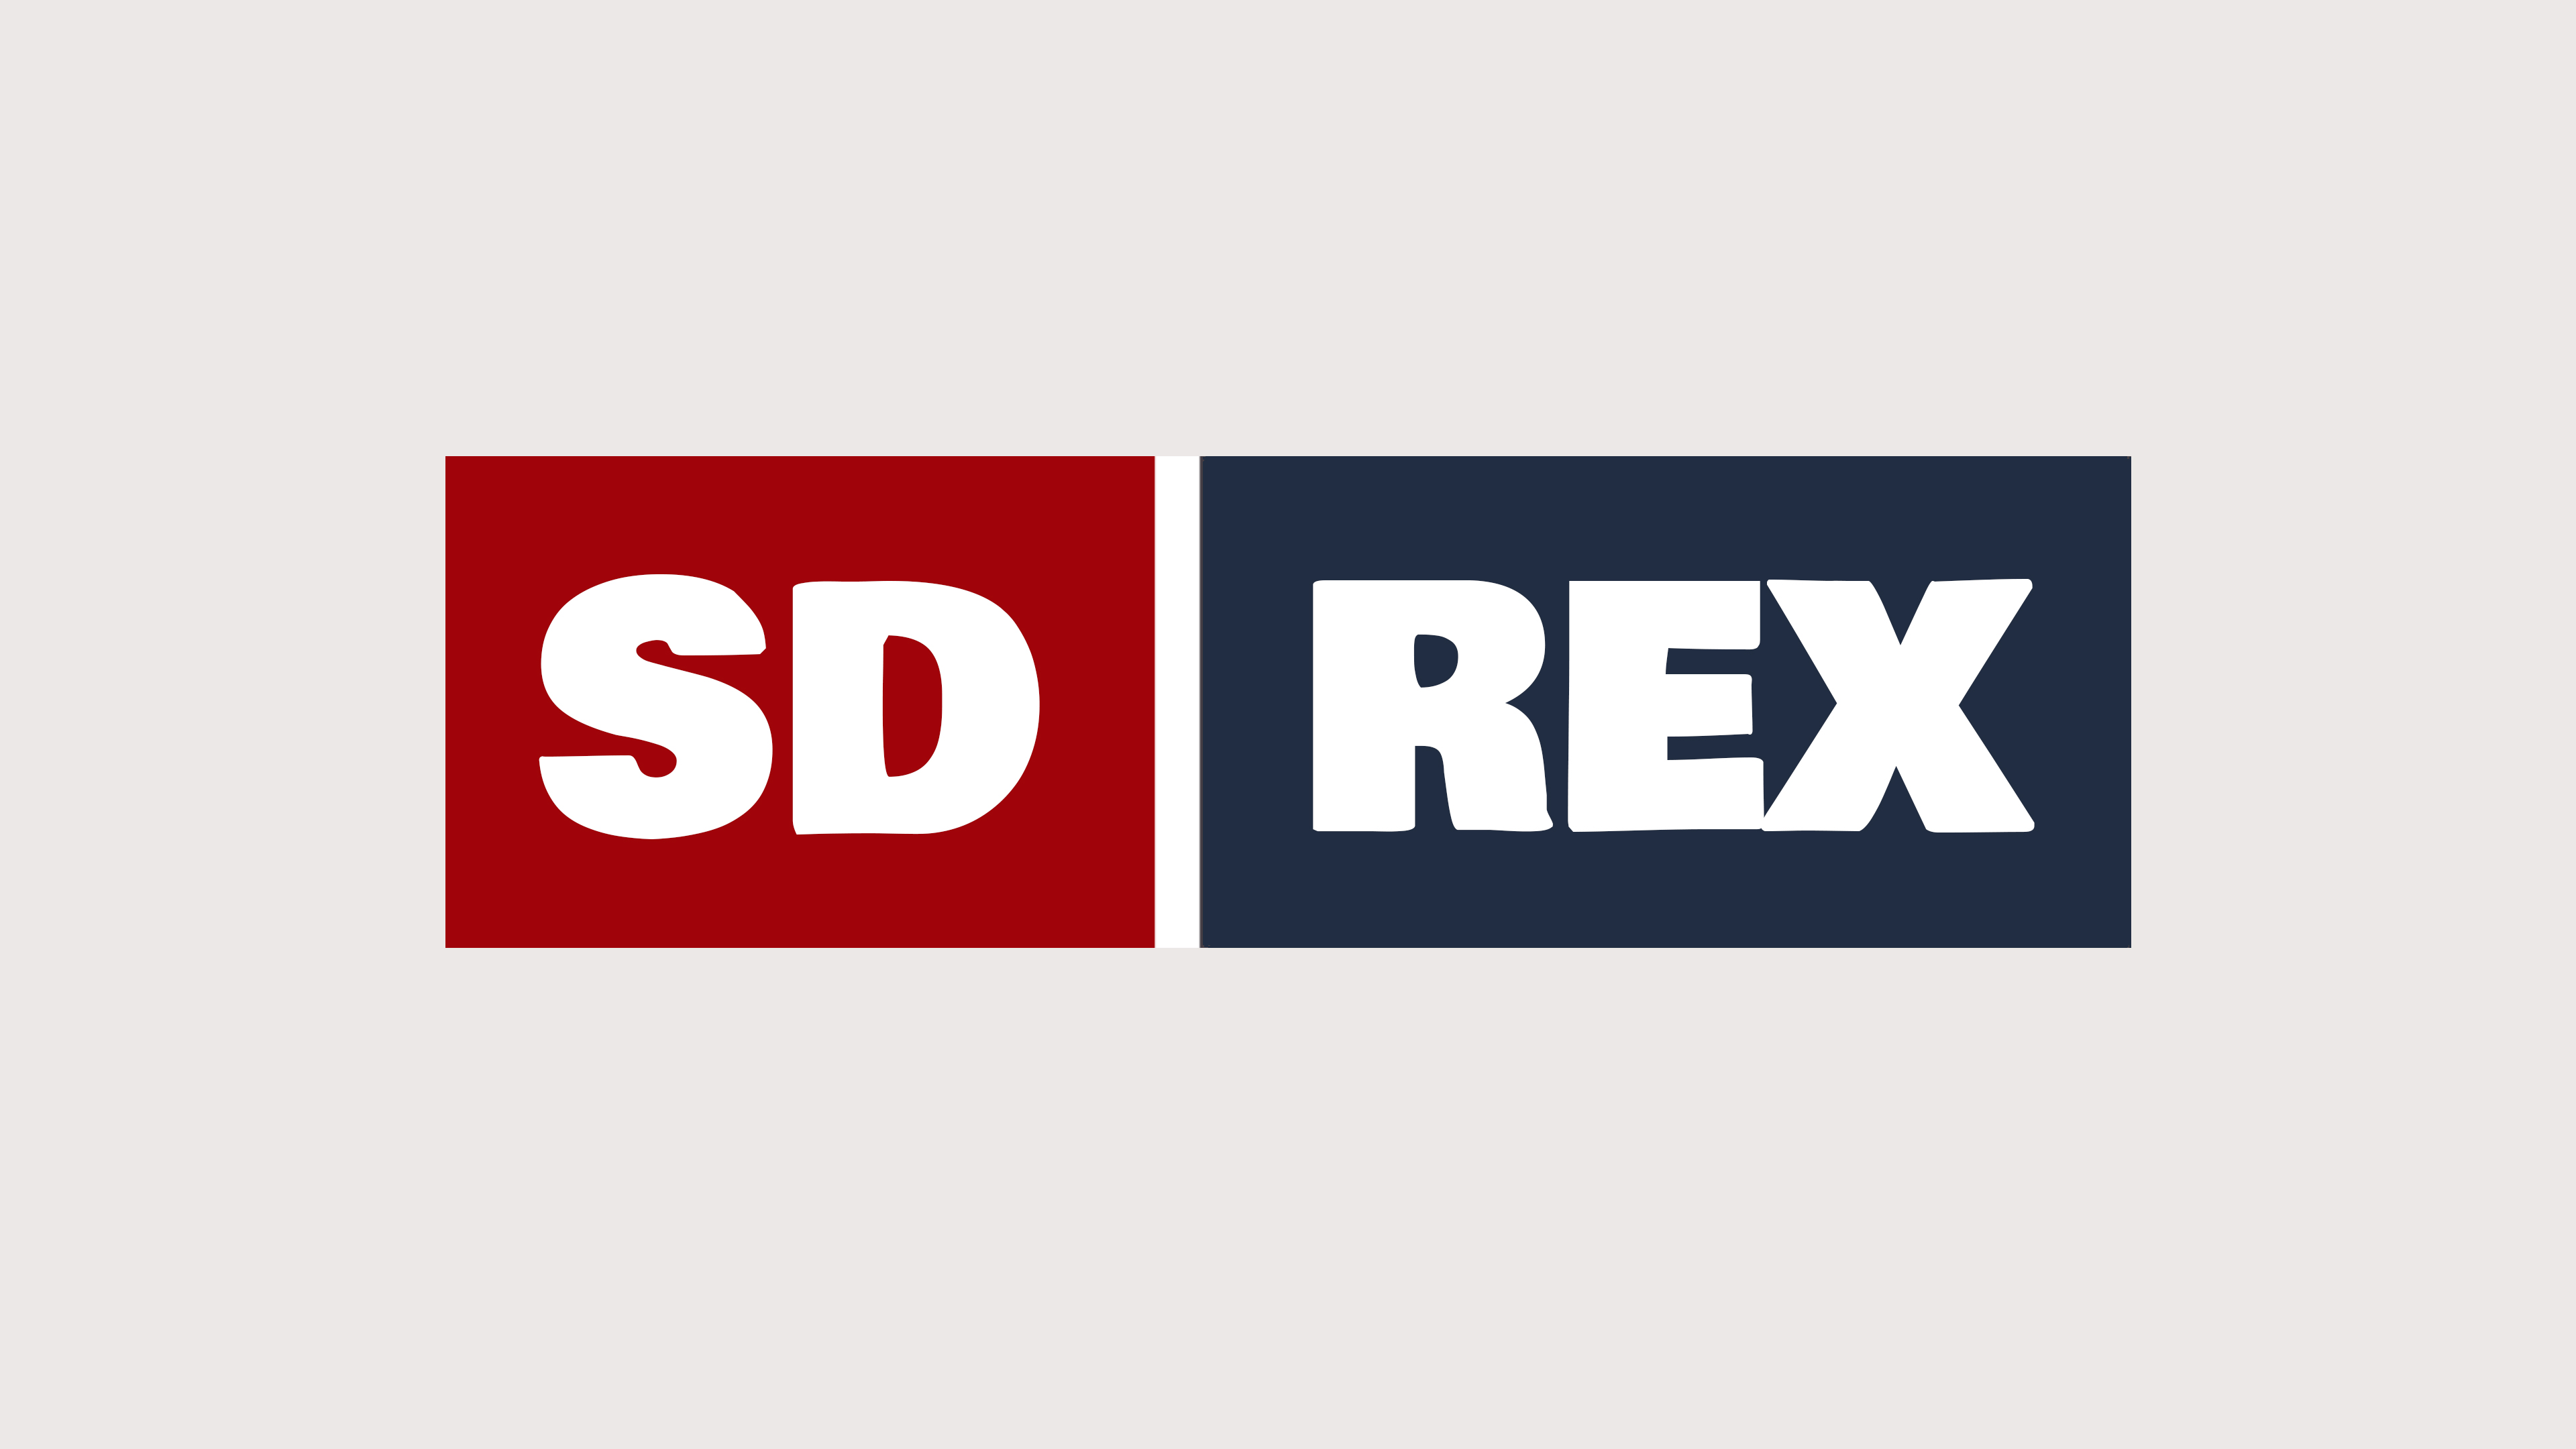 Sotwe tv. Логотип телеканала SD Rex. Телевидение логотип. Логотип канала. Эмблемы телевизионных каналов.